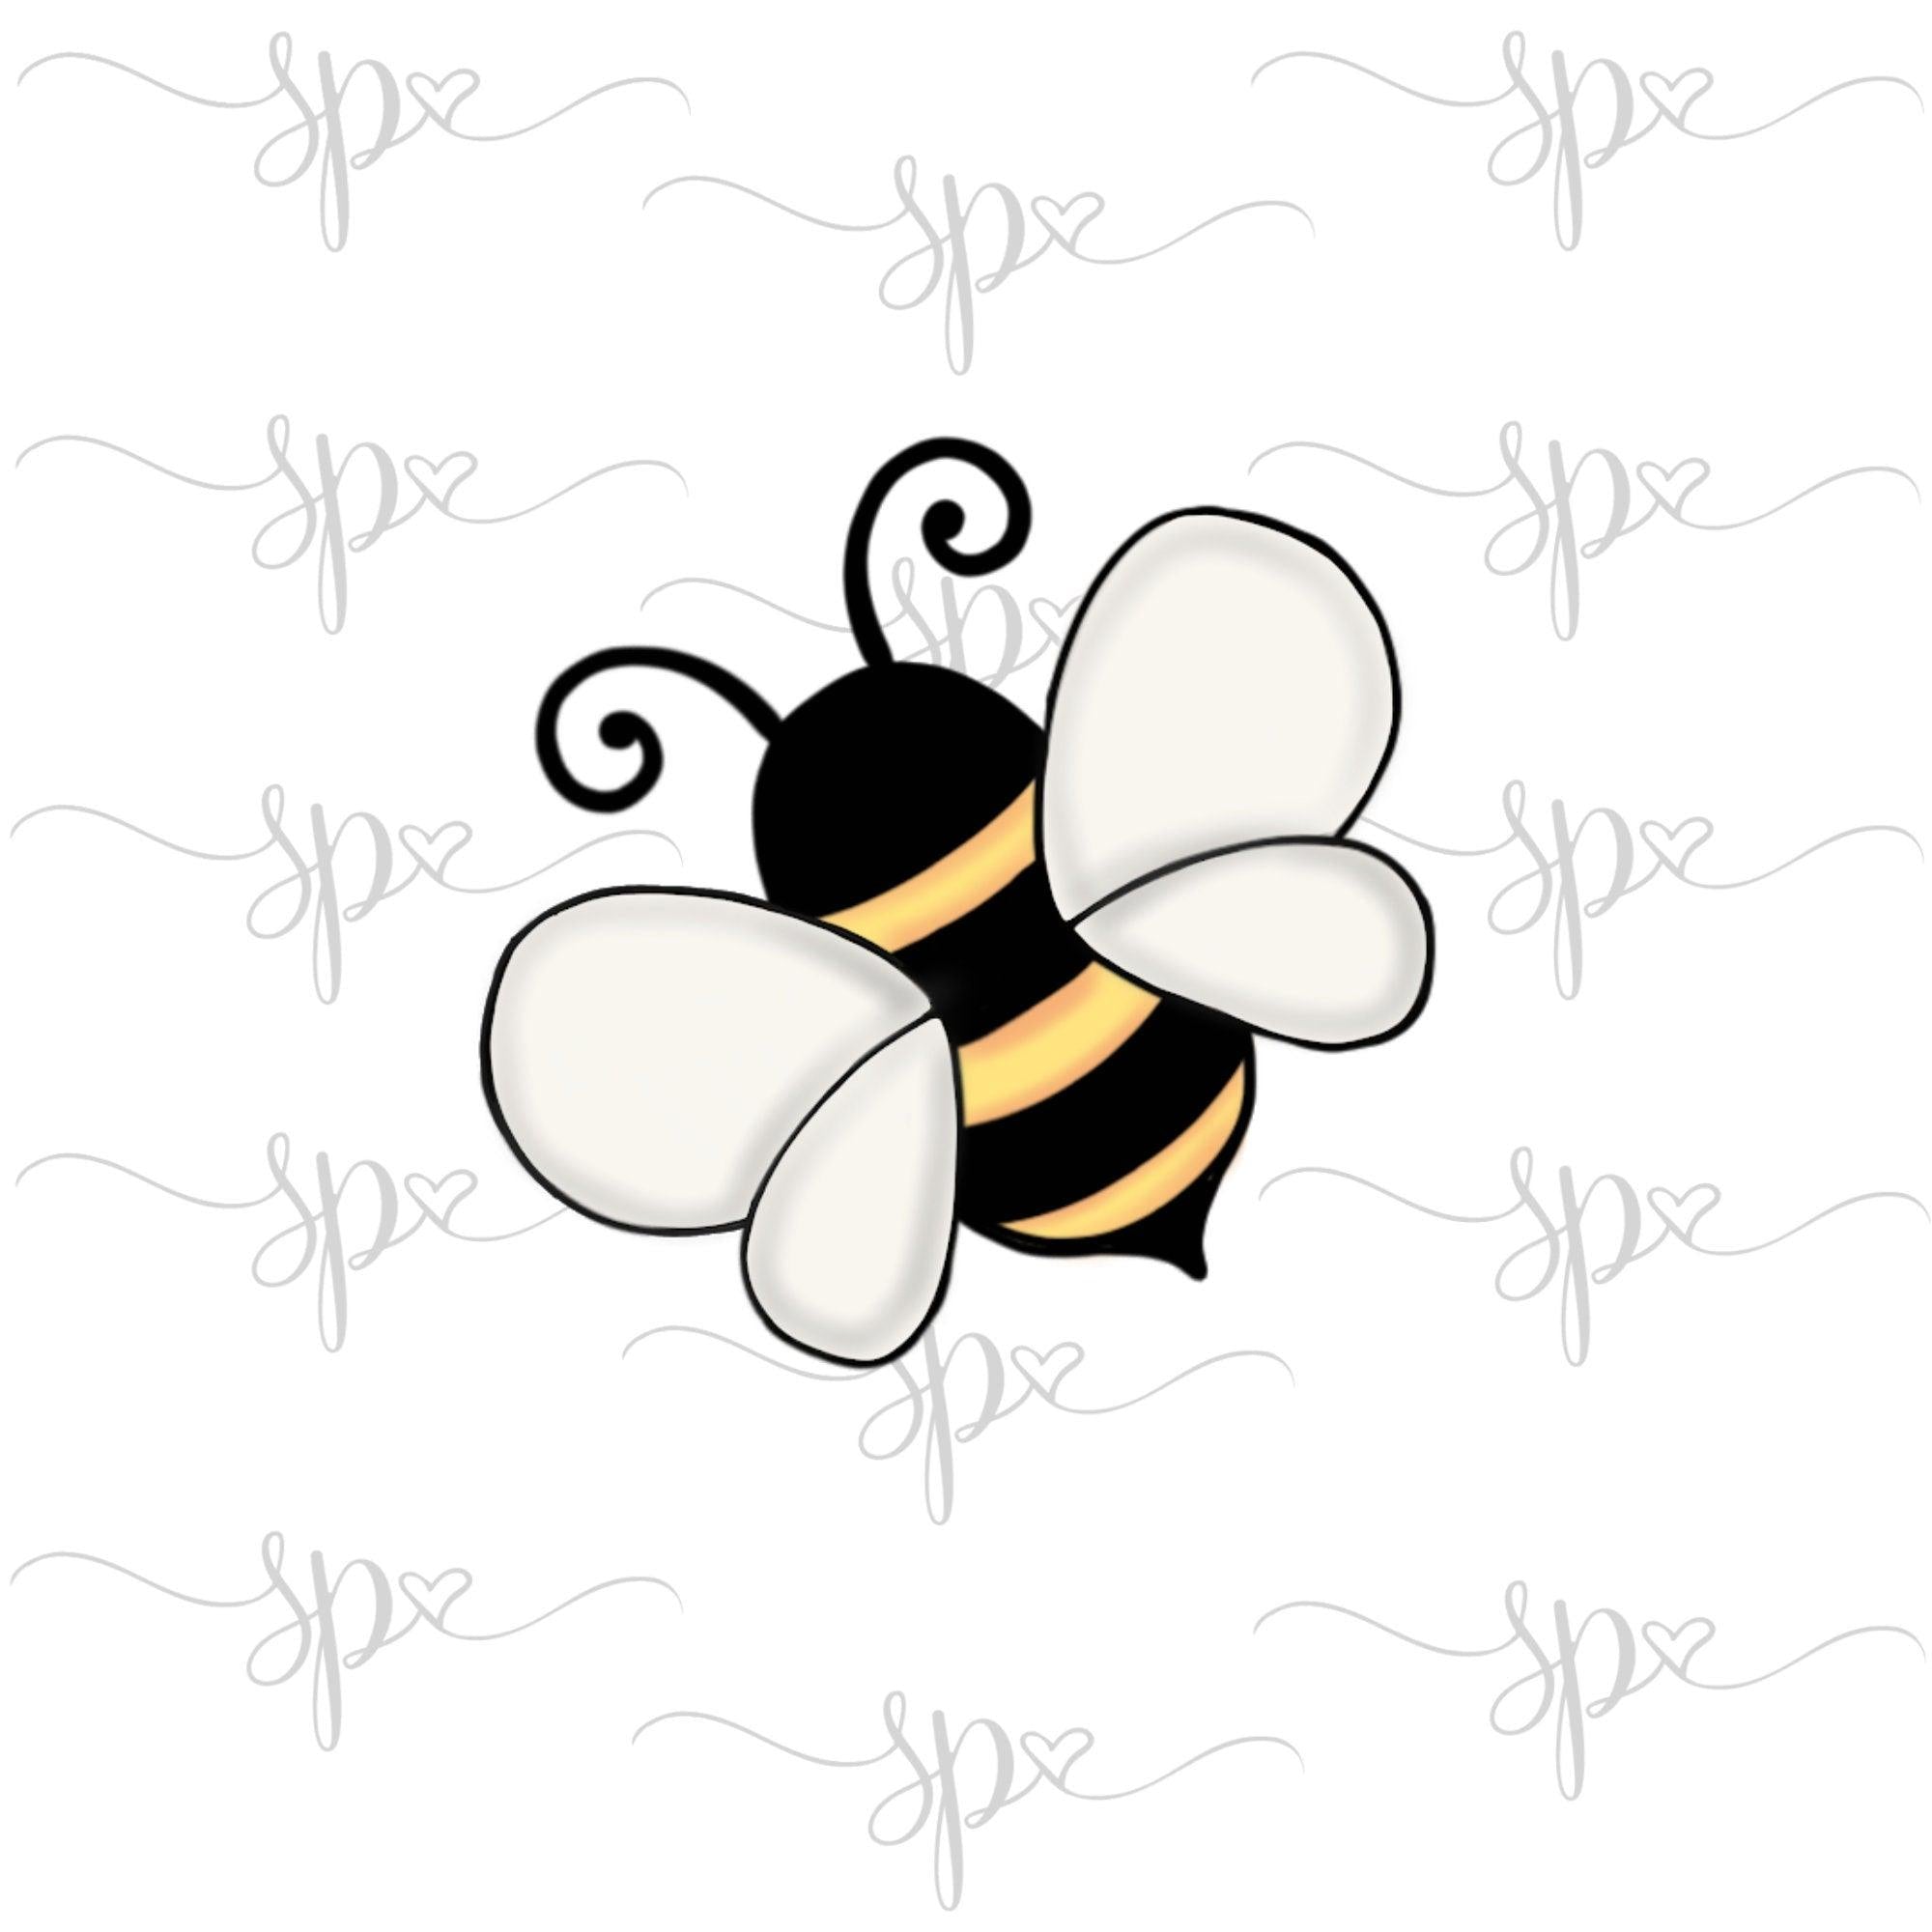 Honey Bee by Lady Milkstache - Sweetleigh 